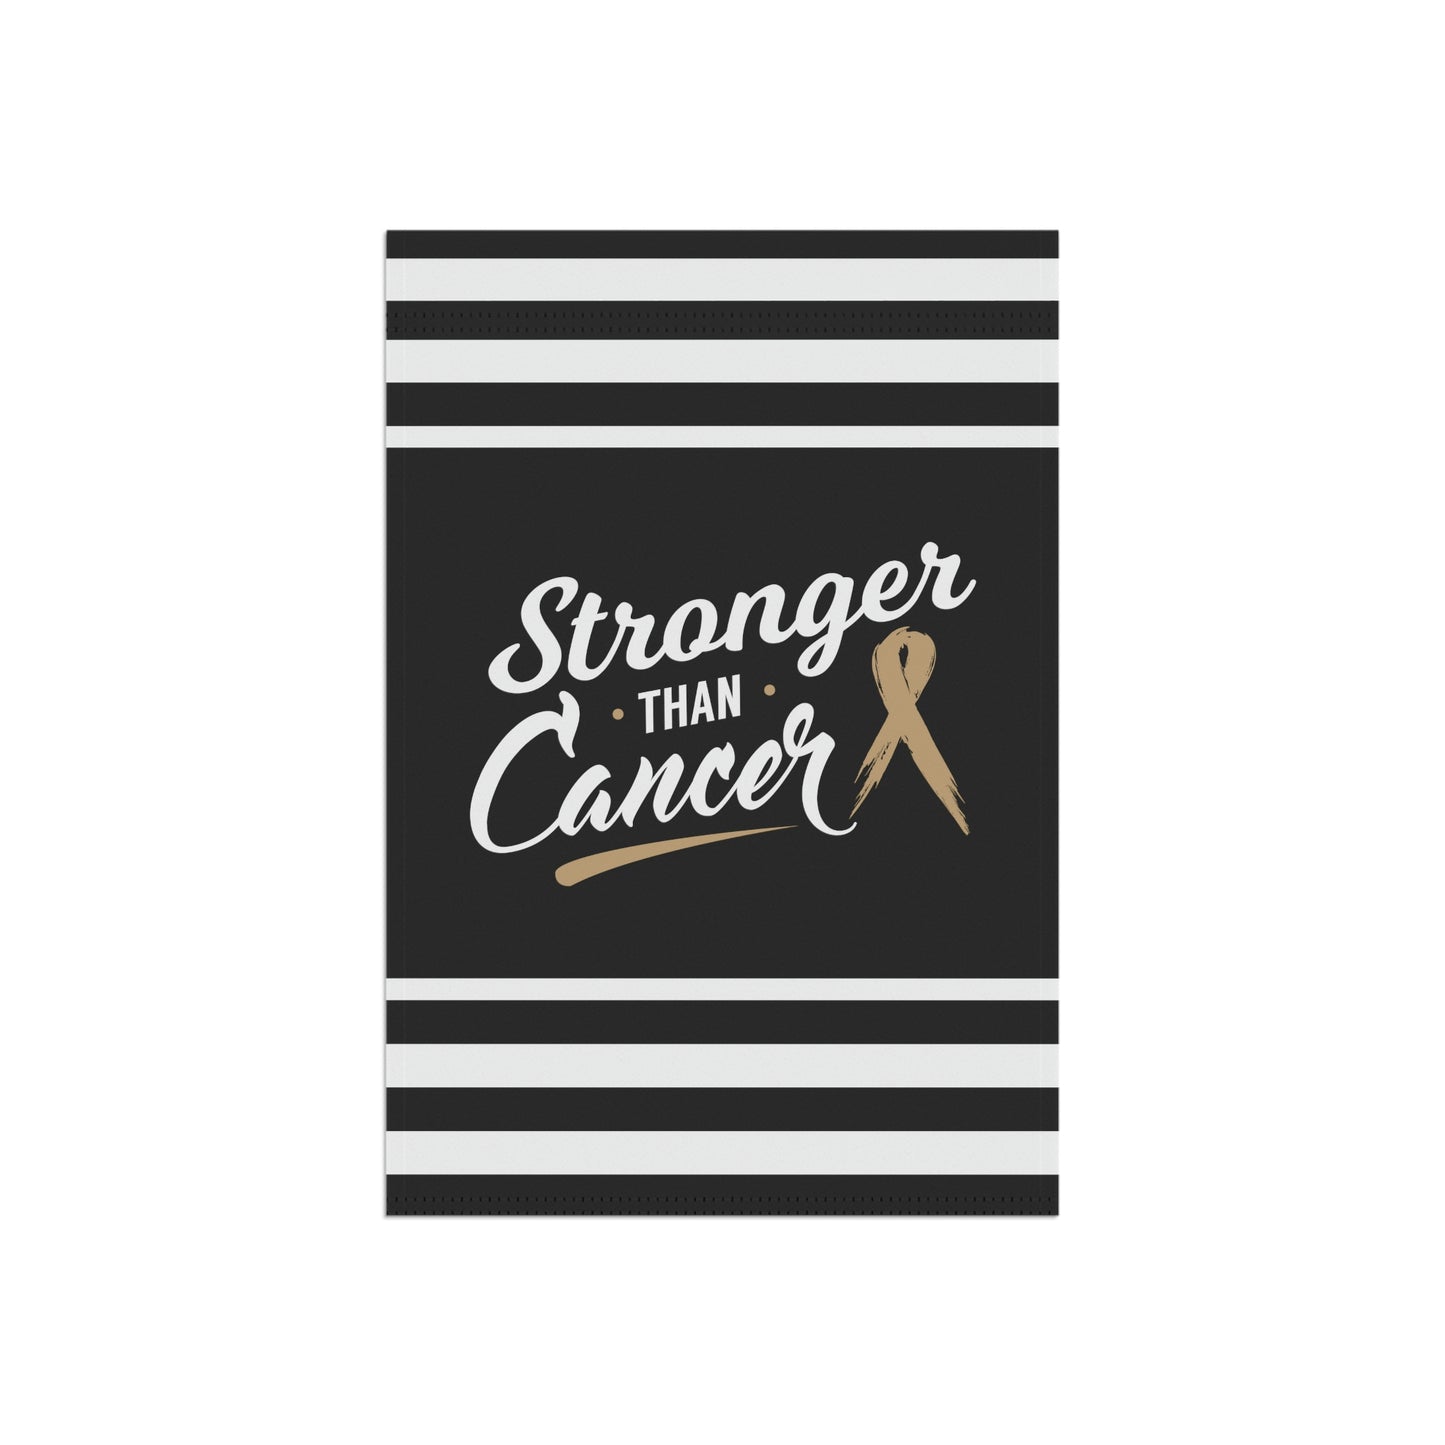 Stronger than Cancer Gold Ribbon Awareness Garden & House Banner